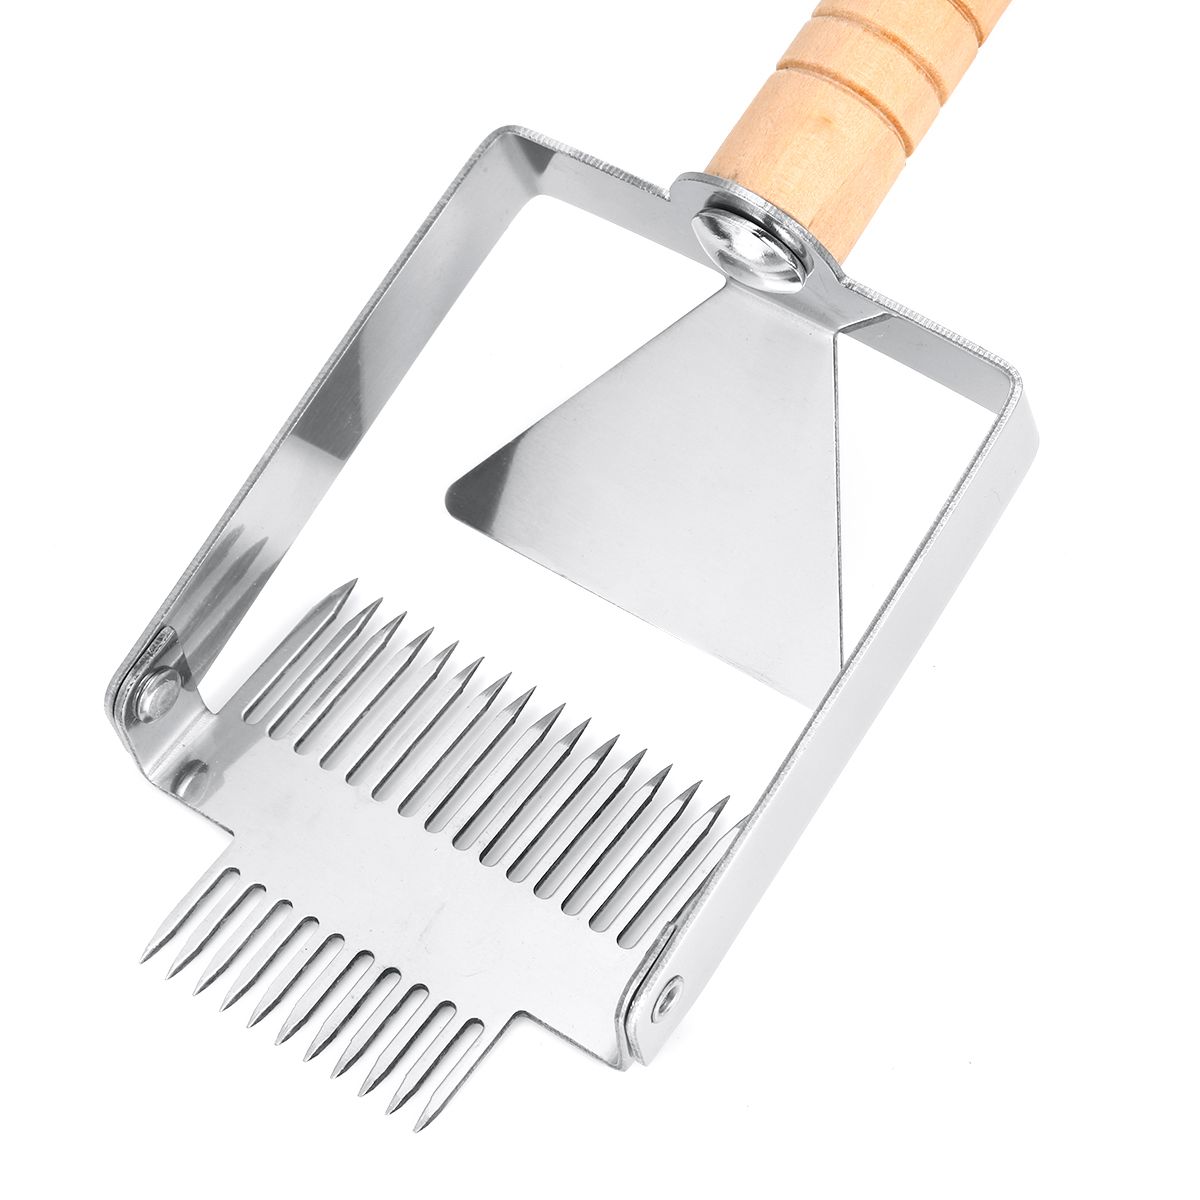 Stainless-Steel-Bee-Hive-Uncapping-Honey-Forks-Scraper-Handle-Beekeeping-Tools-1680741